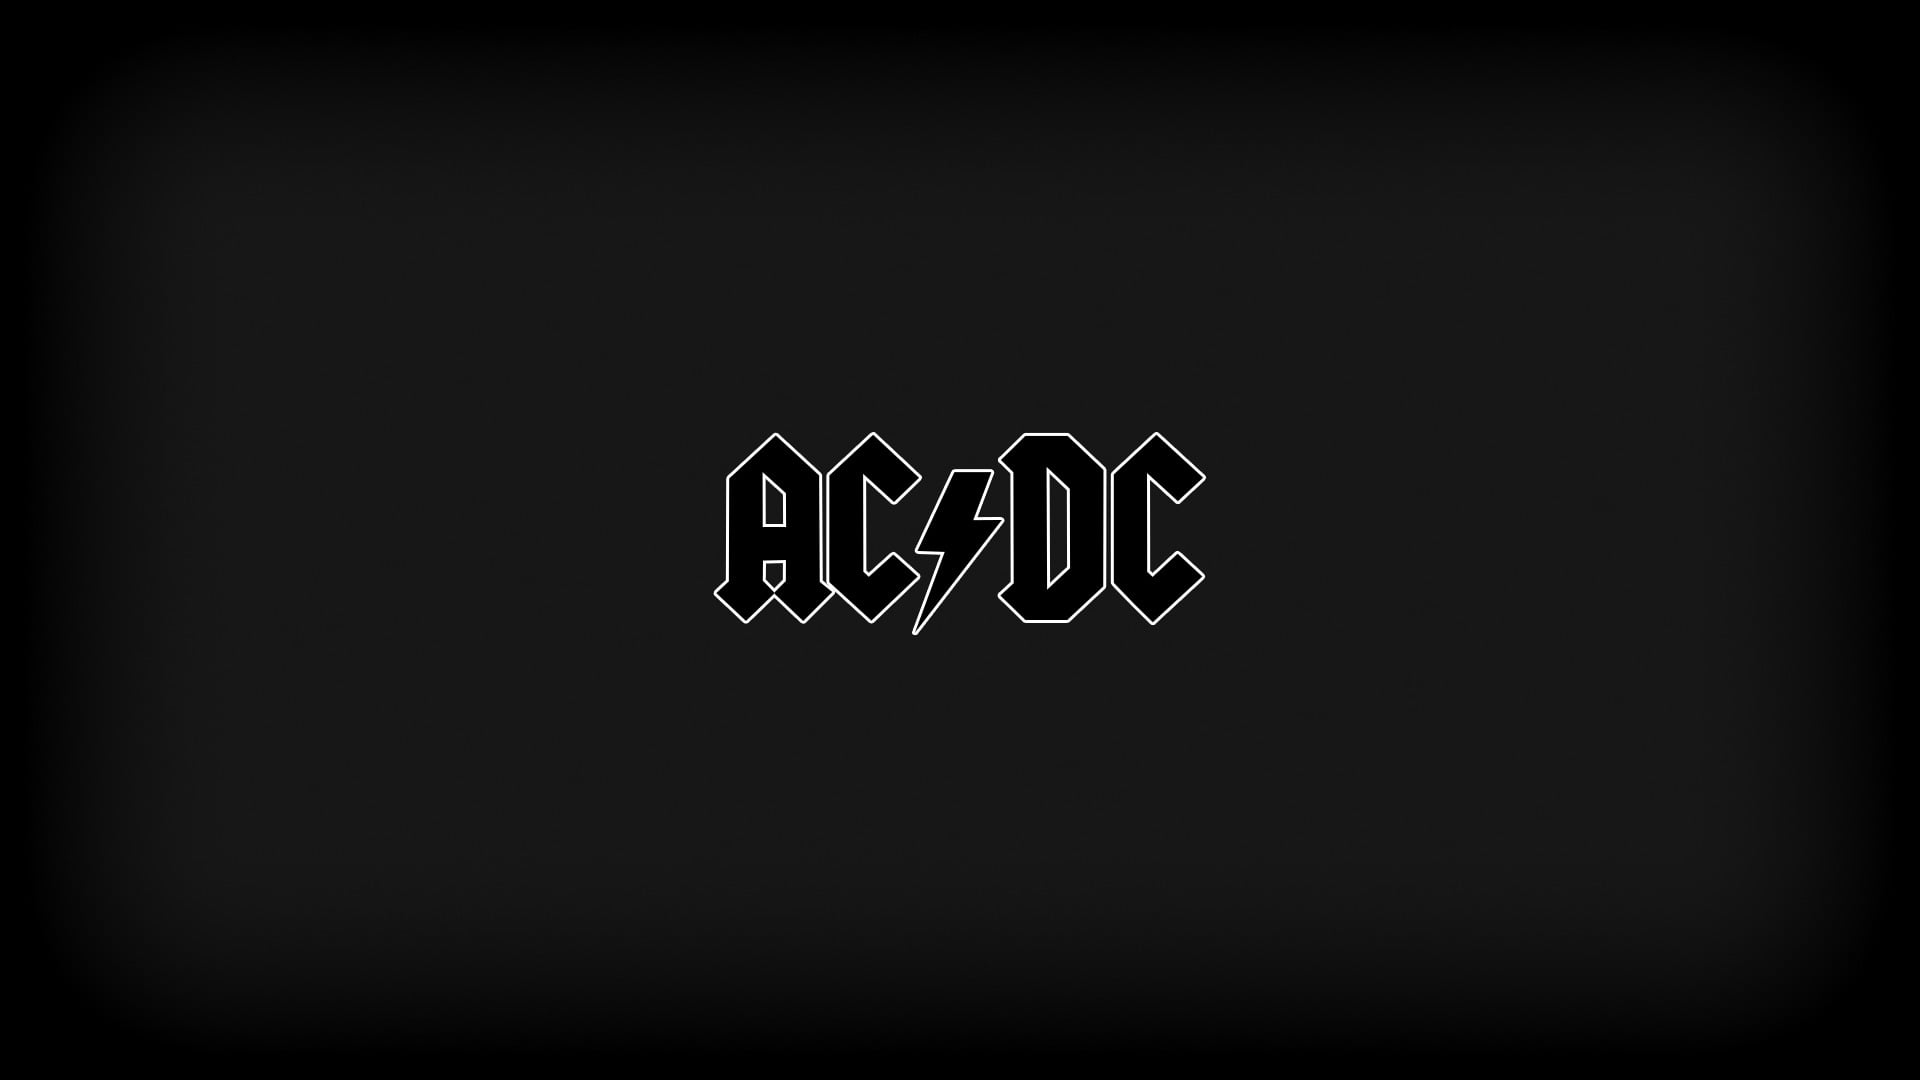 AC DC logo on black wallpaper, acdc, AC/DC, rock